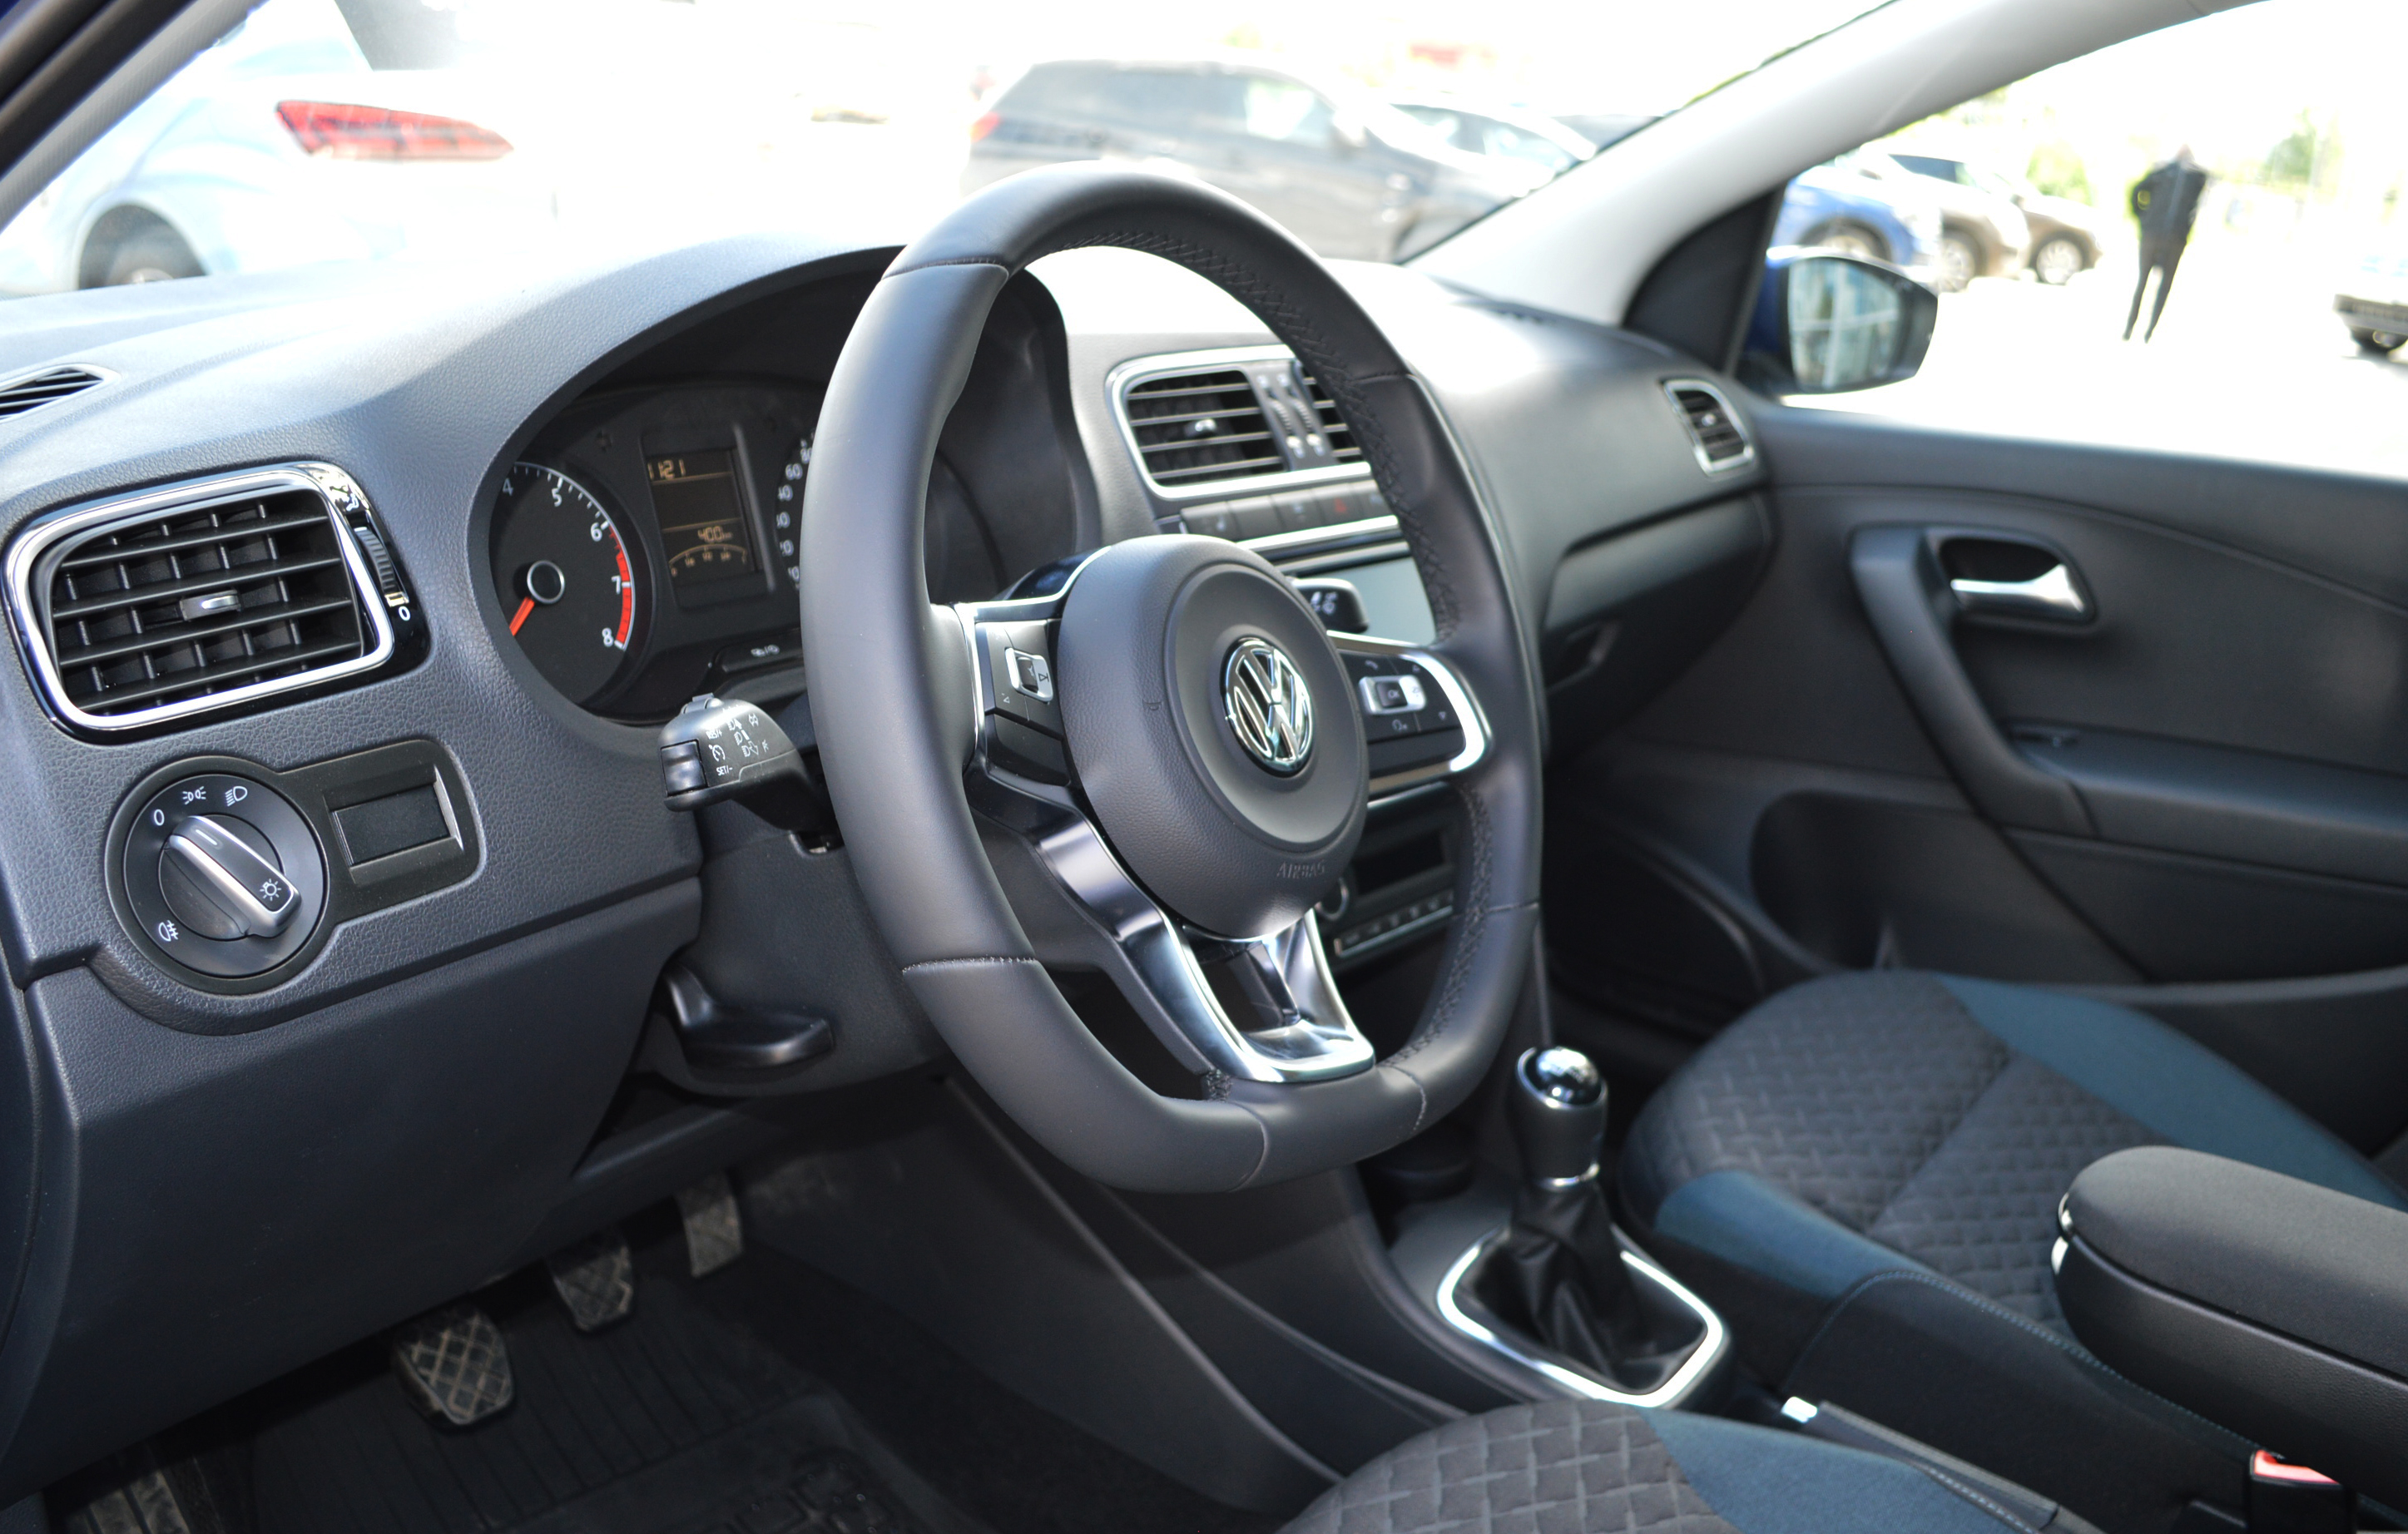 Volkswagen Polo: эталонный образец